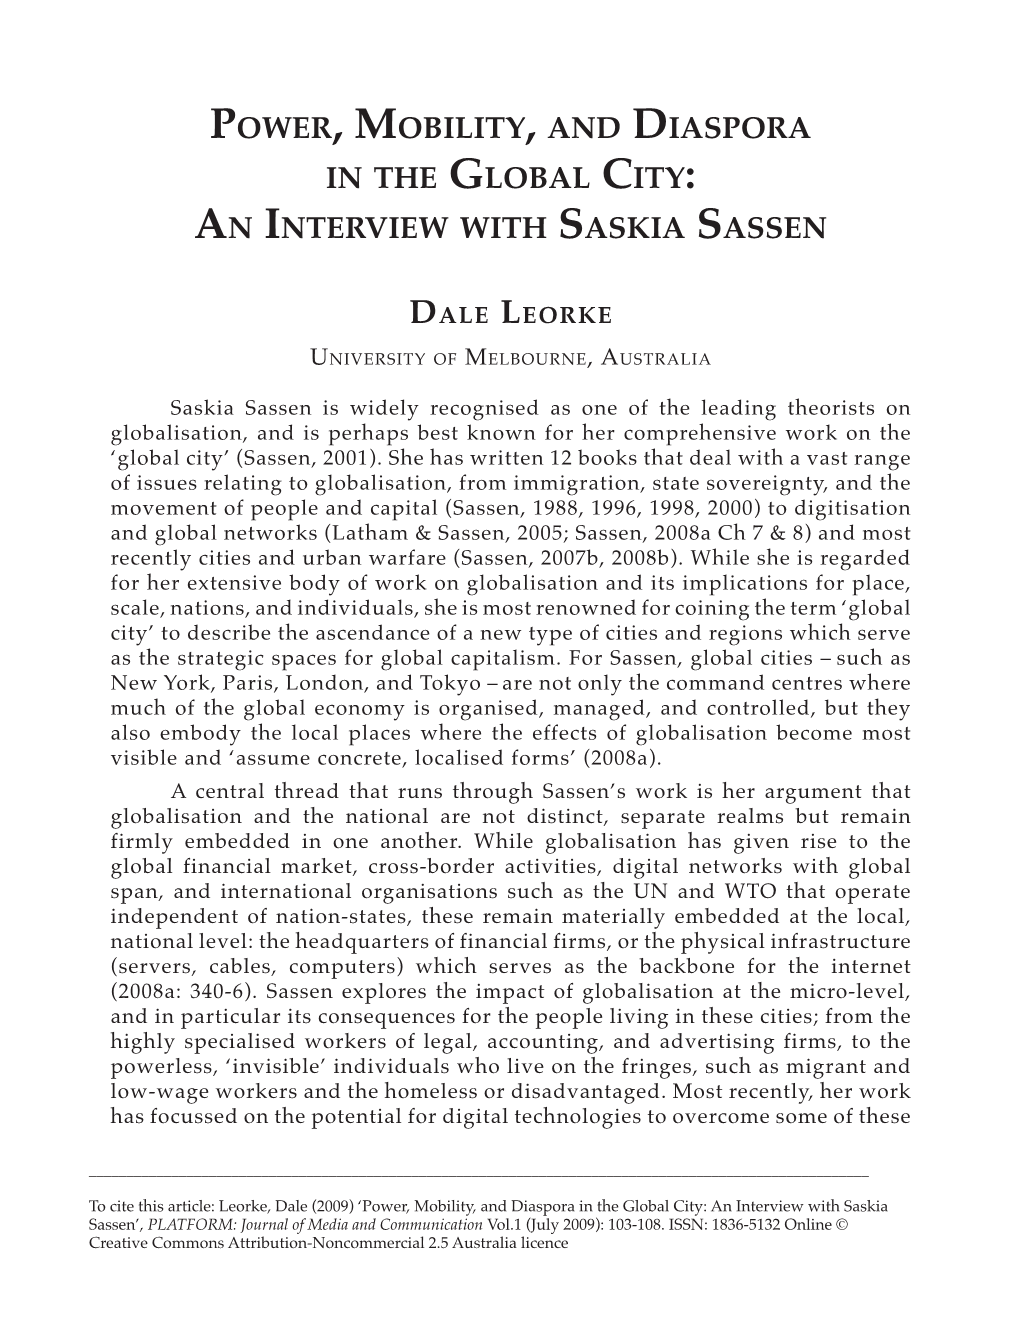 An Interview with Saskia Sassen’, PLATFORM: Journal of Media and Communication Vol.1 (July 2009): 103-108